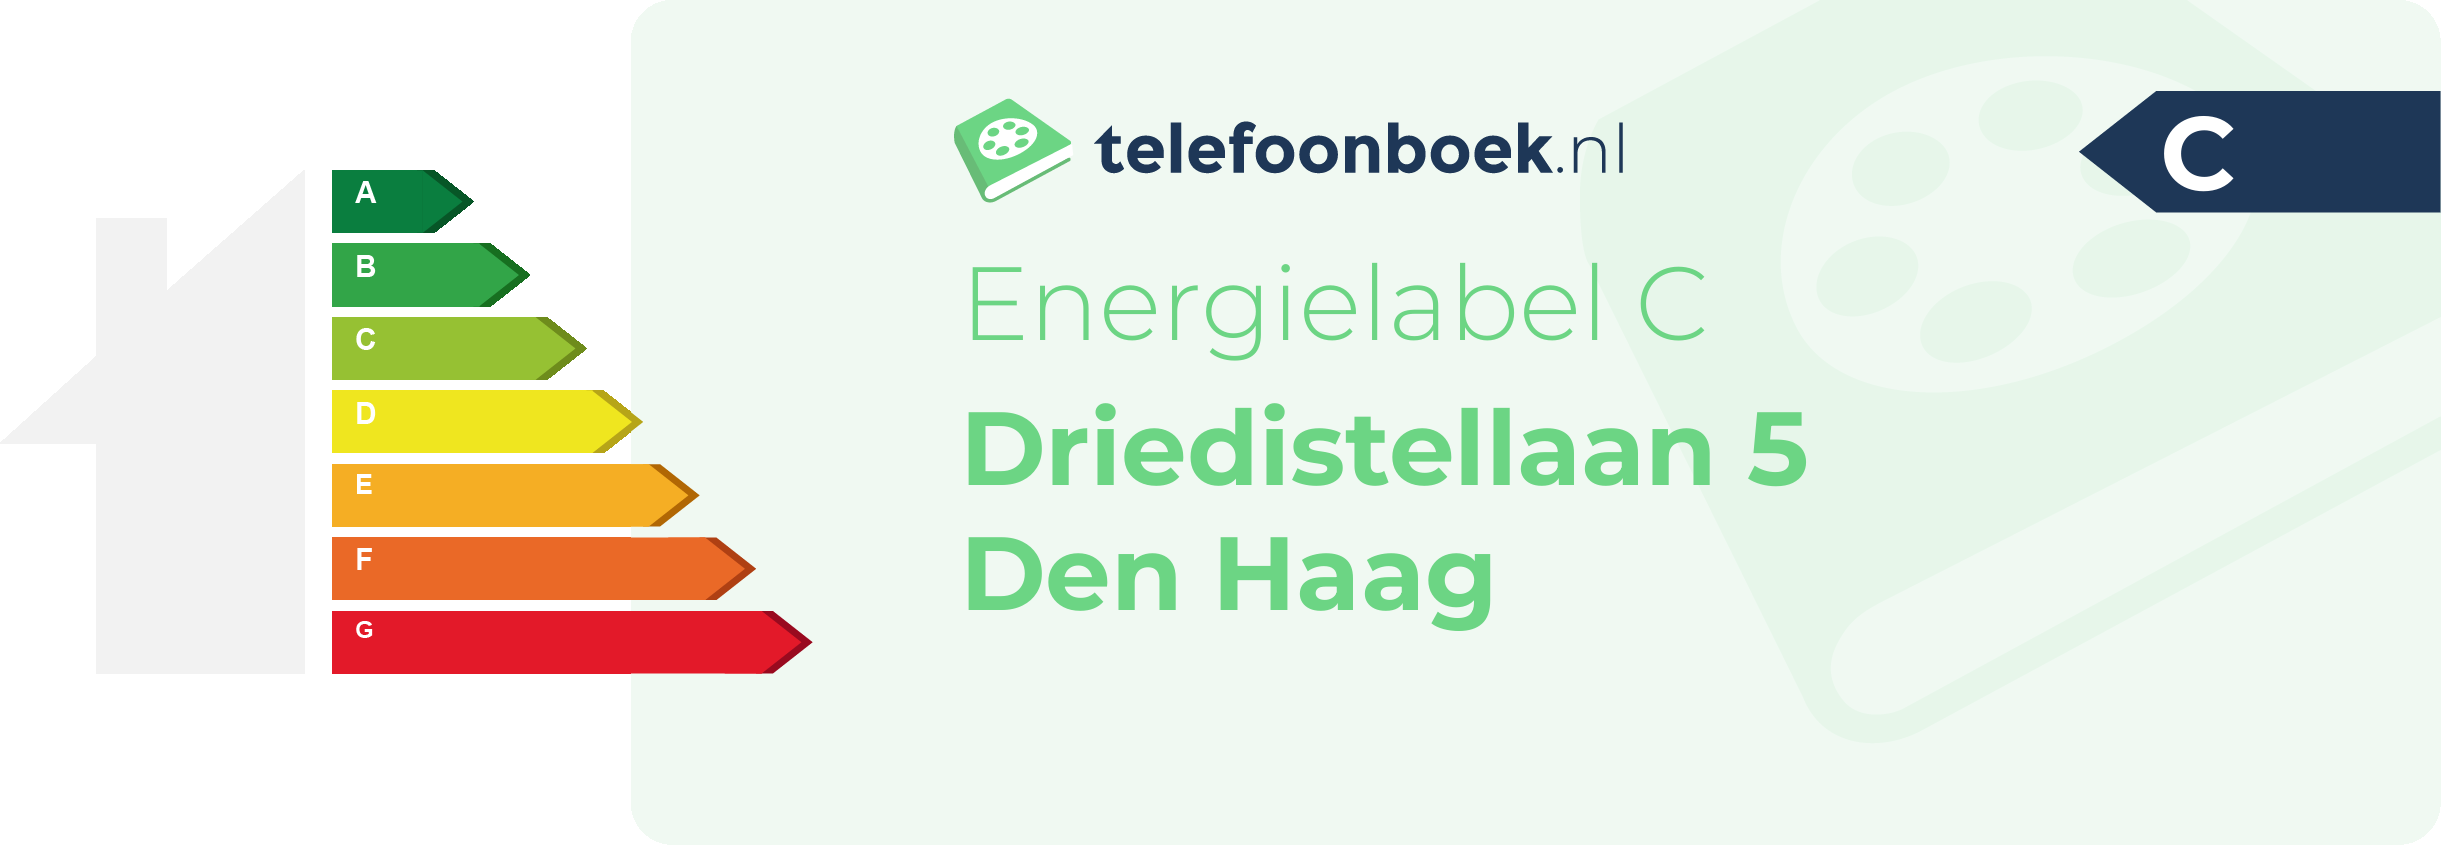 Energielabel Driedistellaan 5 Den Haag